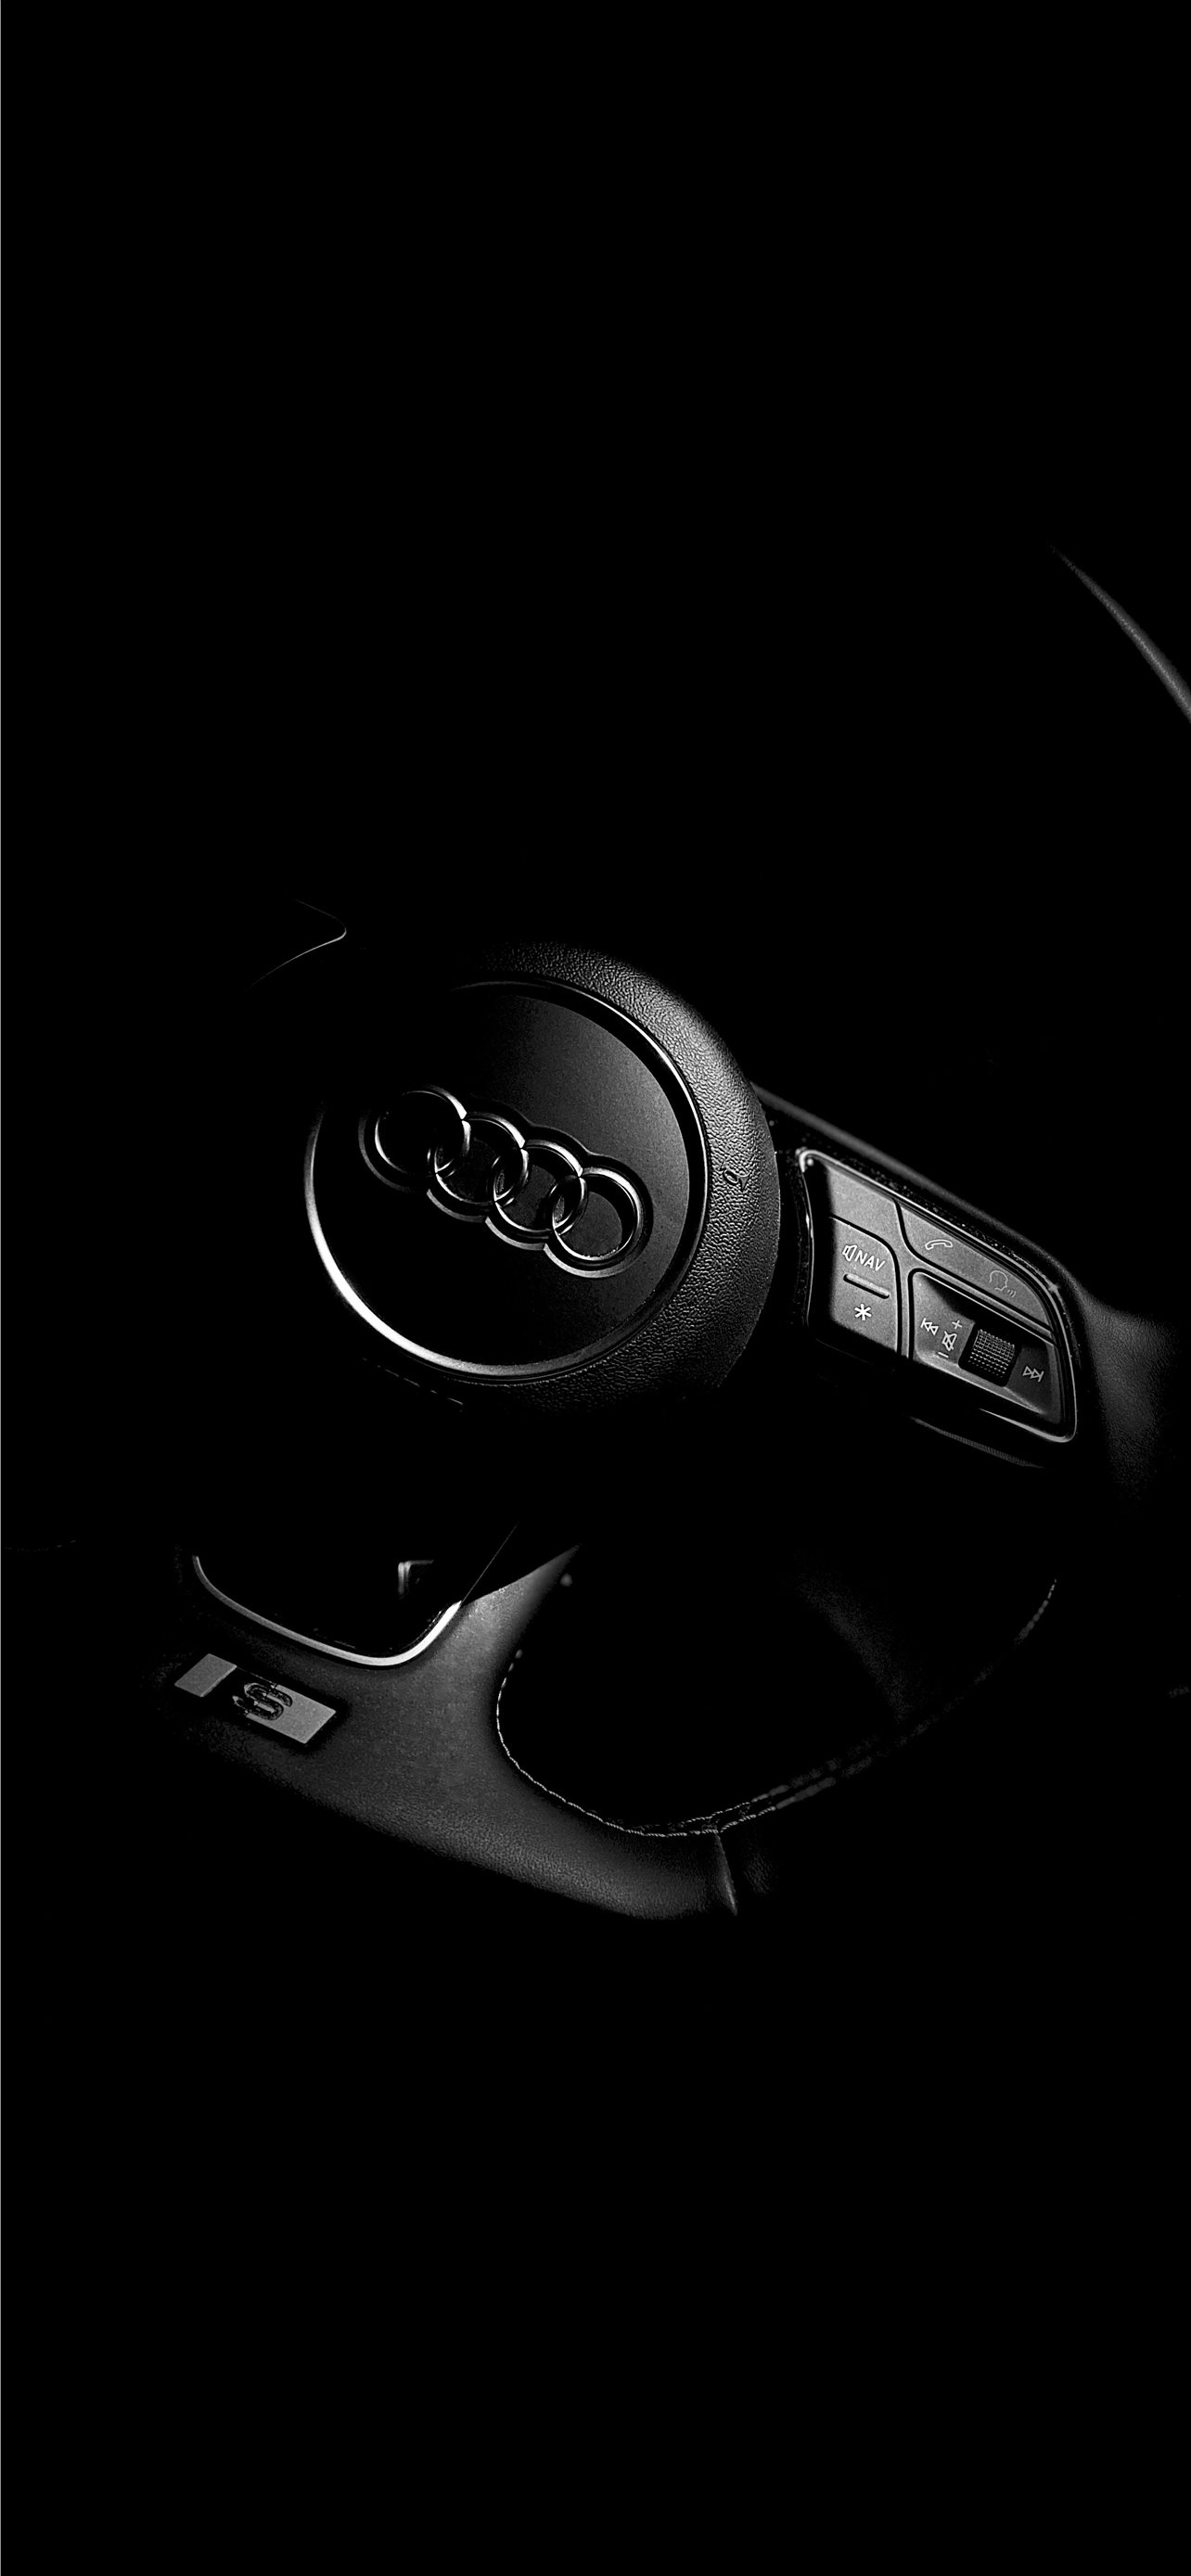 Audi logo top free audi logo access iphone wallpapers free download